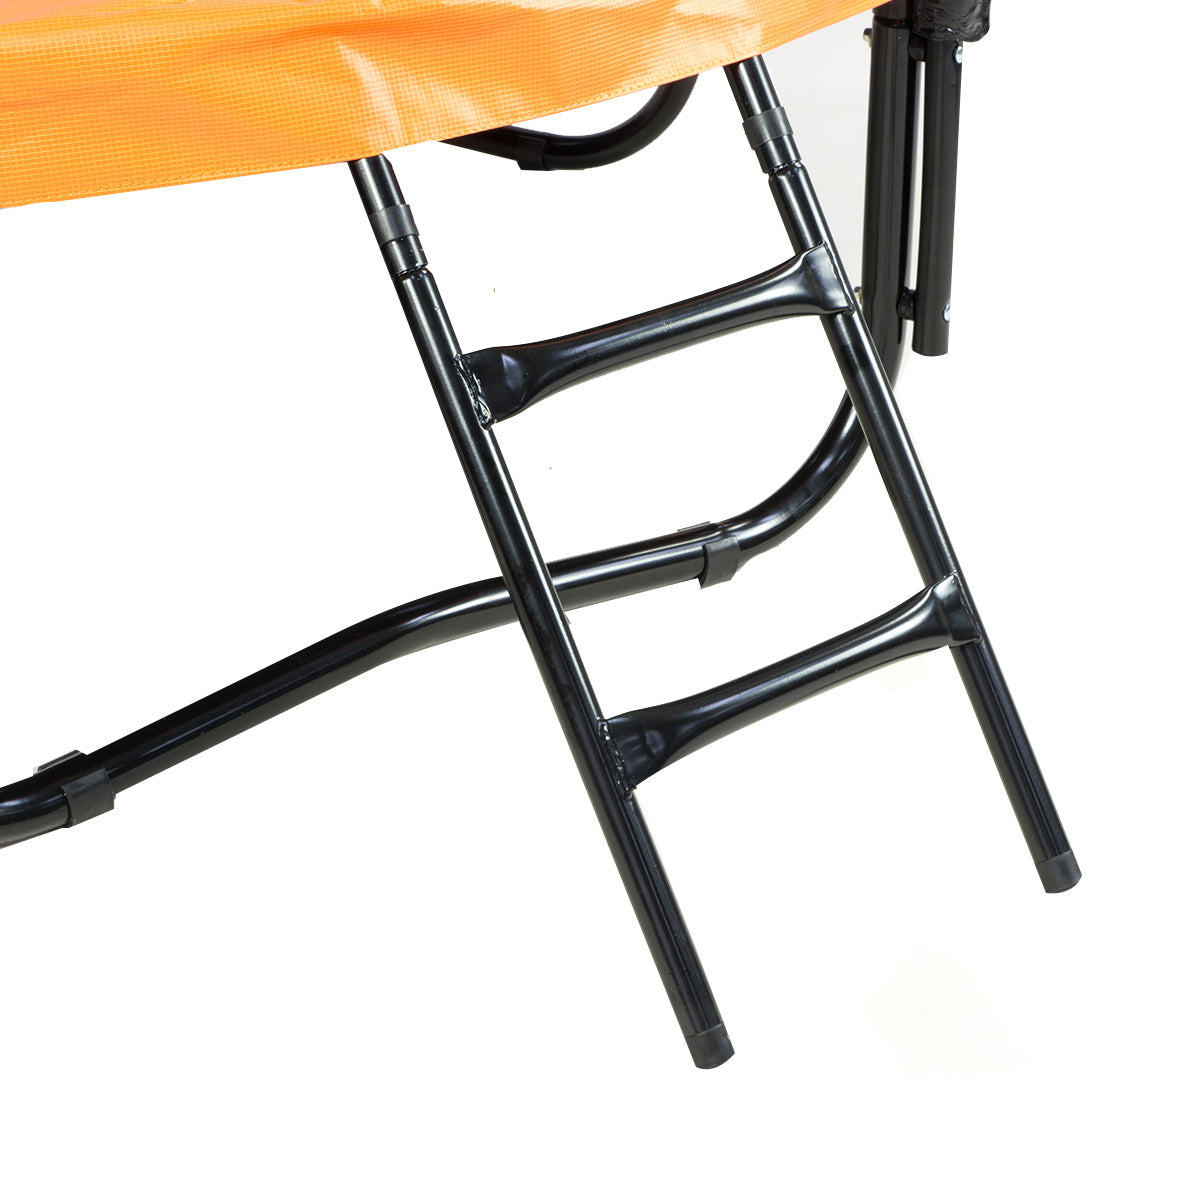 12ft Outdoor Trampoline Kids Children With Safety Enclosure Pad Mat Ladder Basketball Hoop Set - Orange